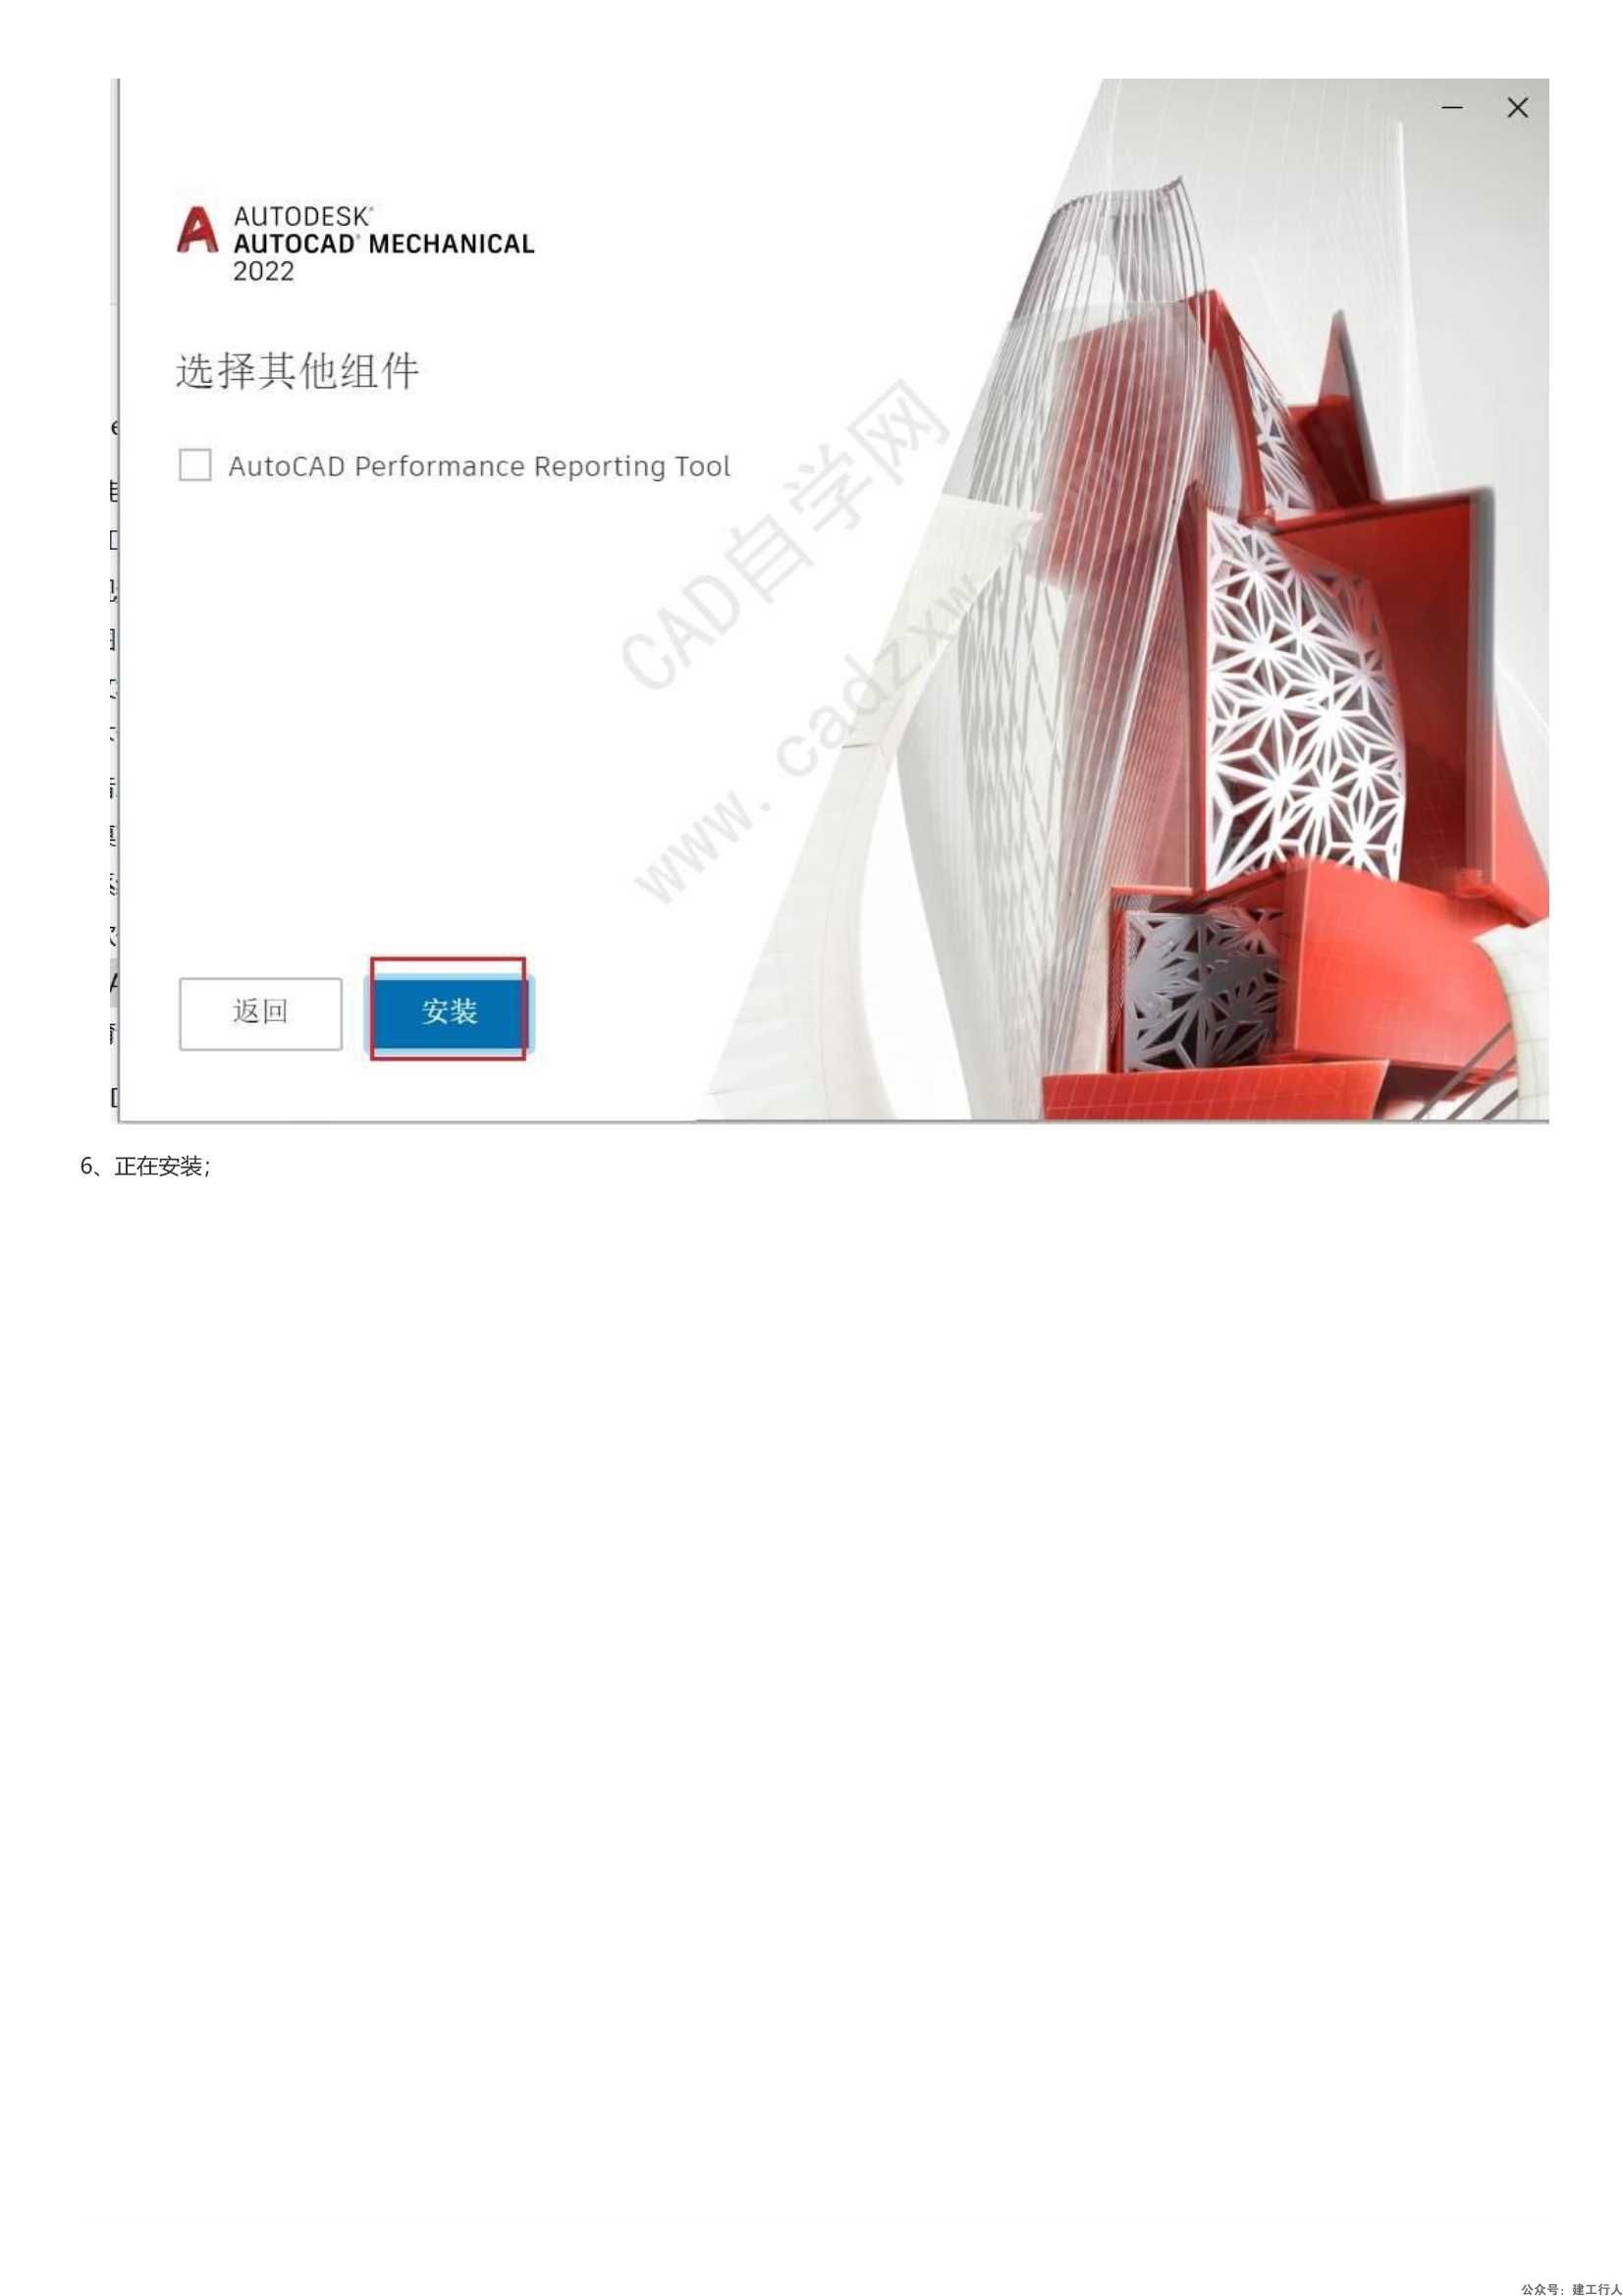 AutoCAD2022 中文机械版安装破解激活教程 _0004.Jpeg